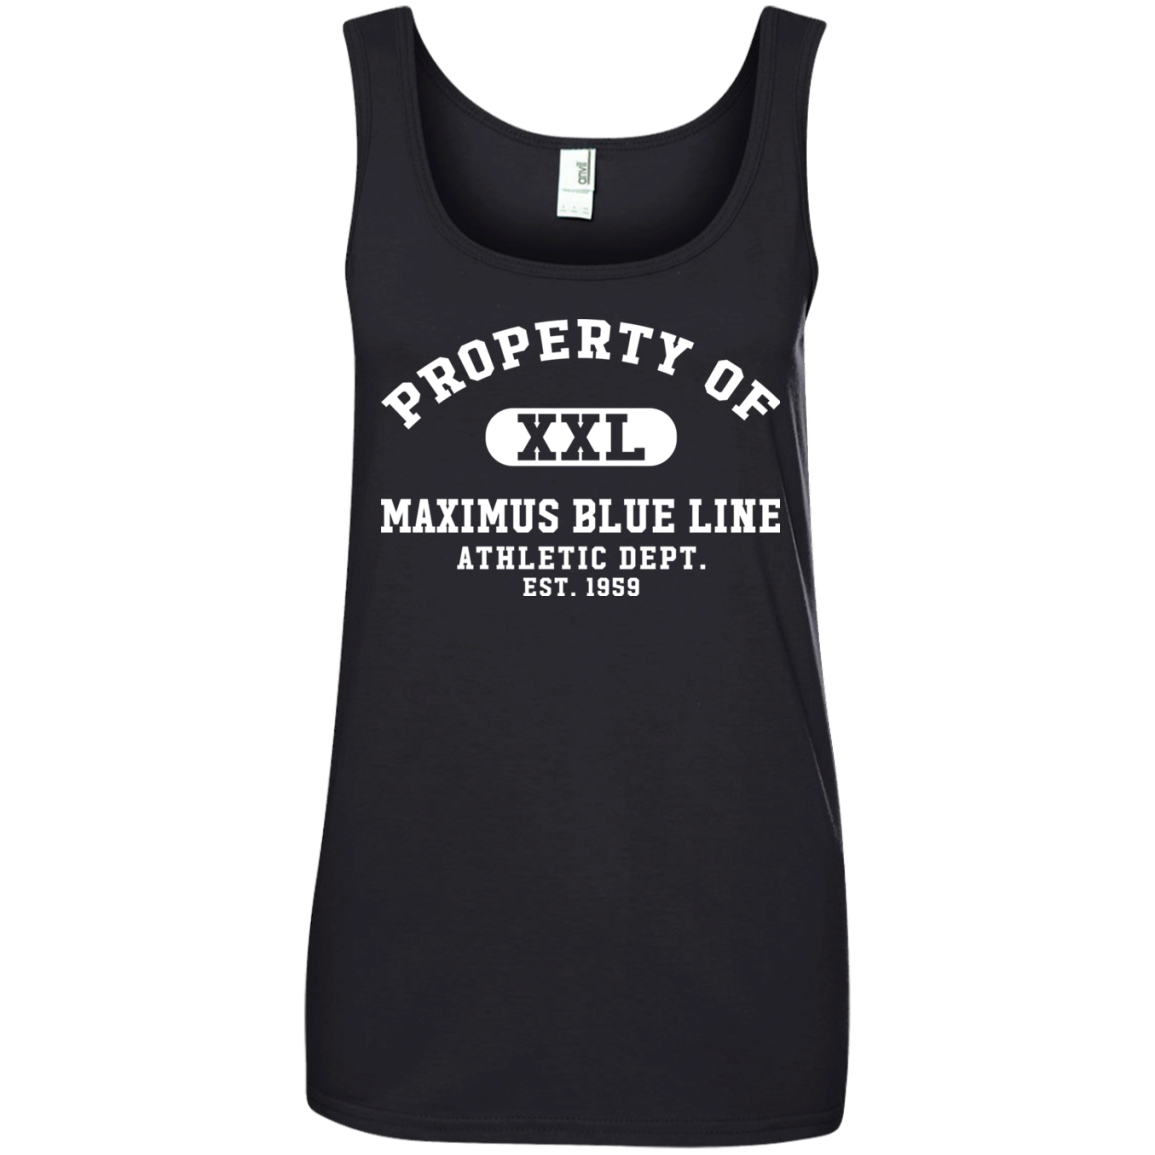 Maximus Blue Line Athletic dept. Ladies Ringspun Cotton Tank Top